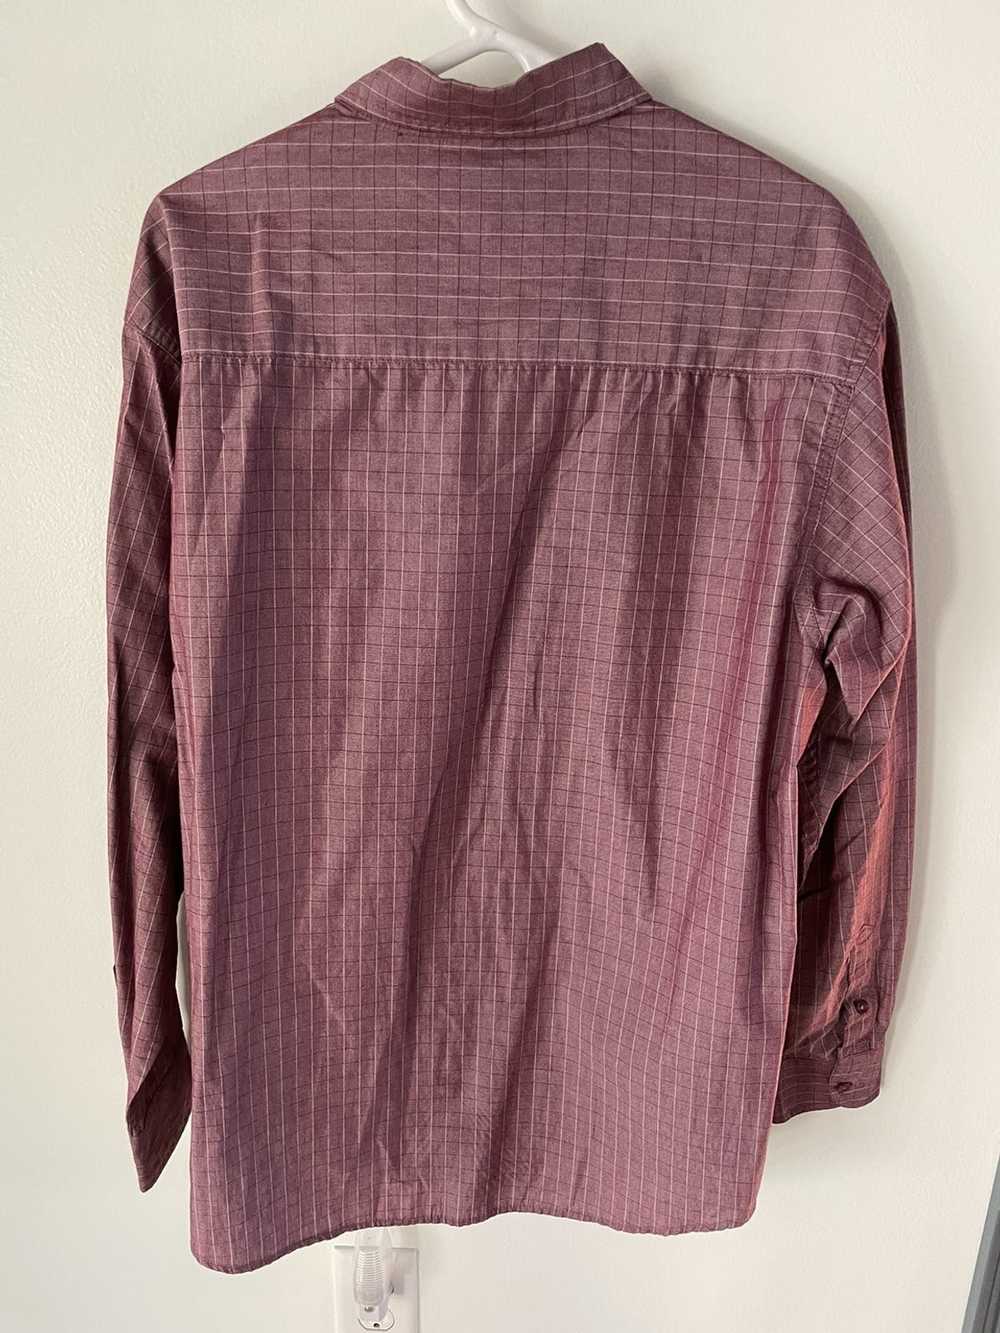 Haggar Long Sleeve Plaid Shirt - image 2